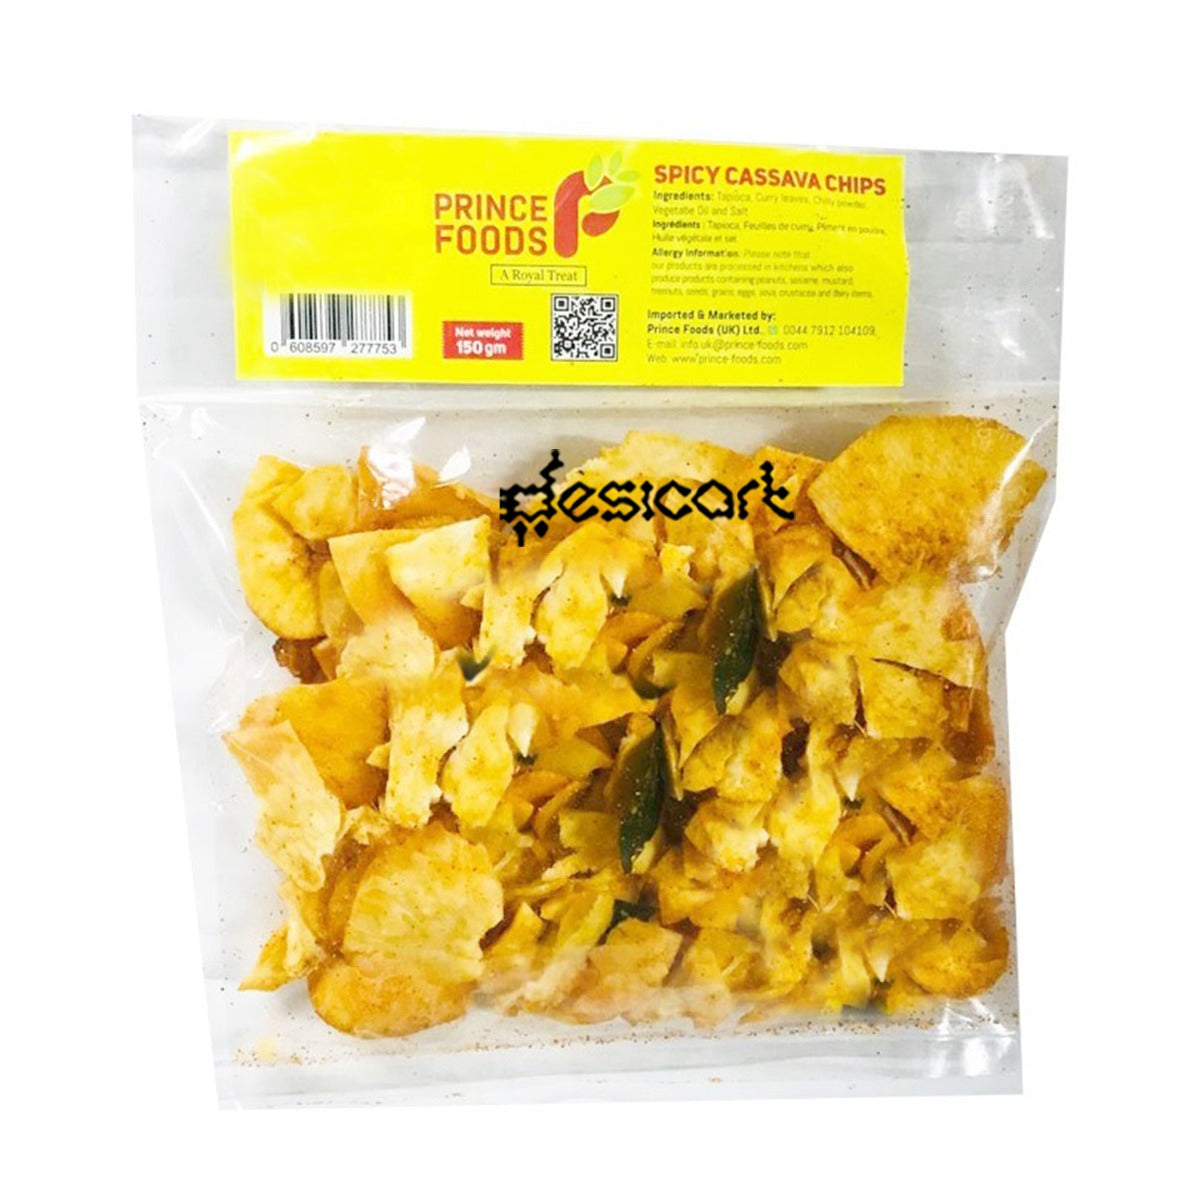 Prince Foods Spicy Cassava Chips 150g B1/G1